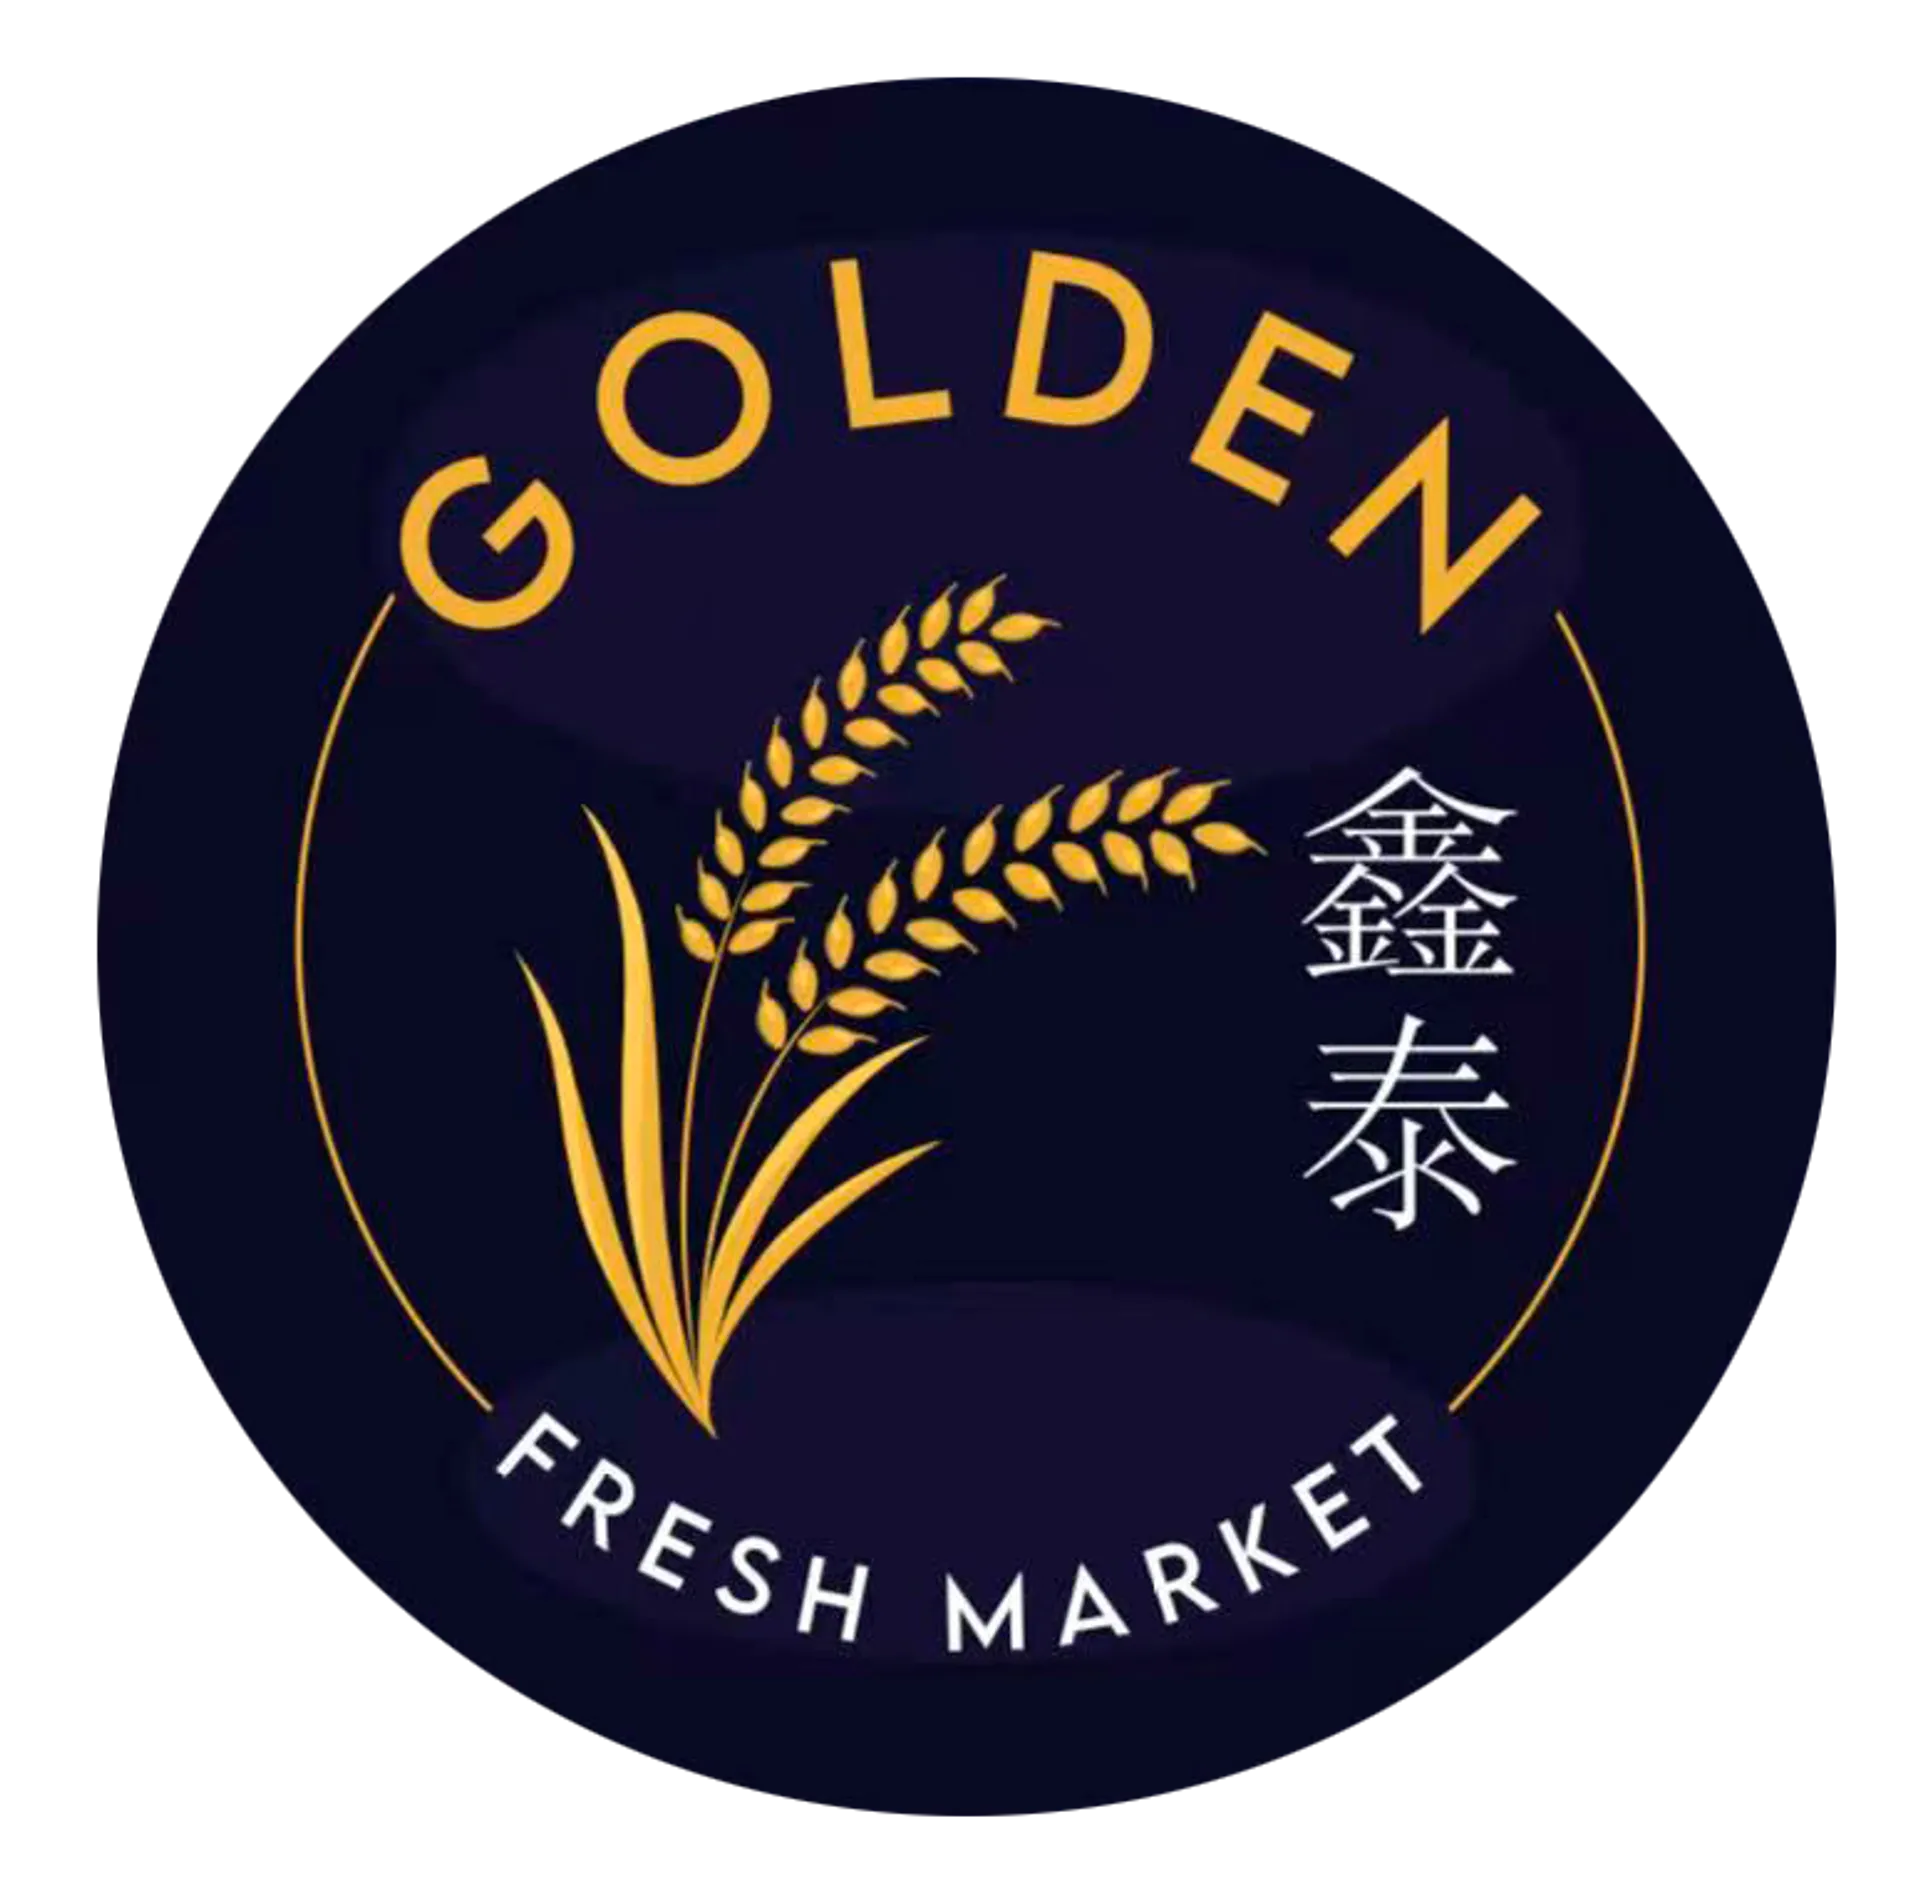 GOLDEN FRESH MARKET logo